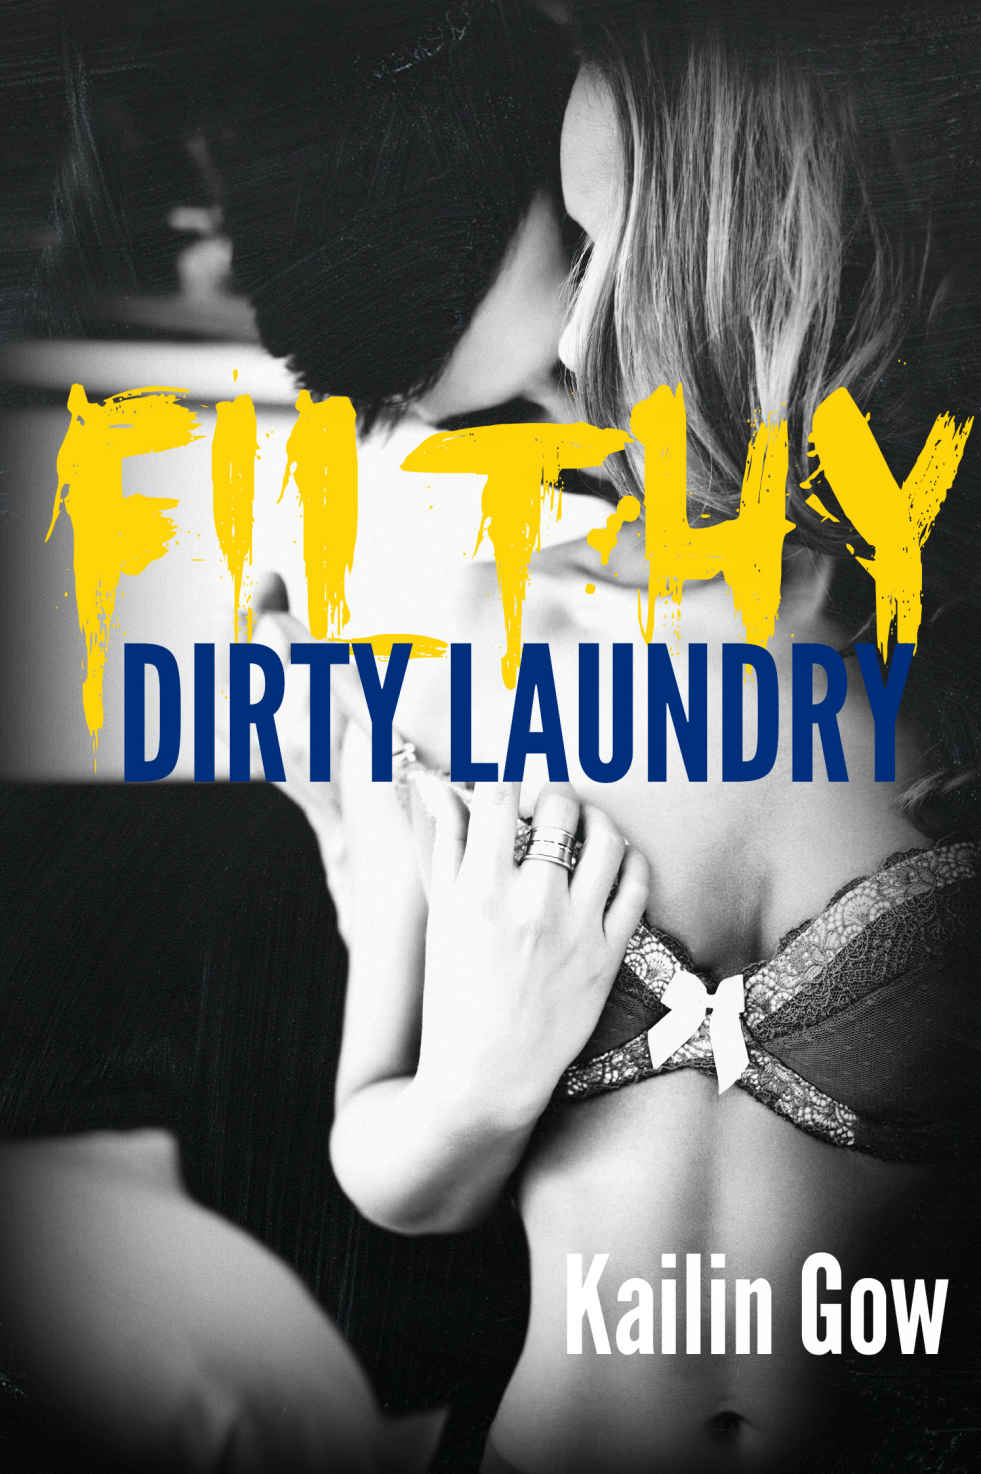 Filthy Dirty Laundry (Filthy Dirty Laundry #1) by Kailin Gow